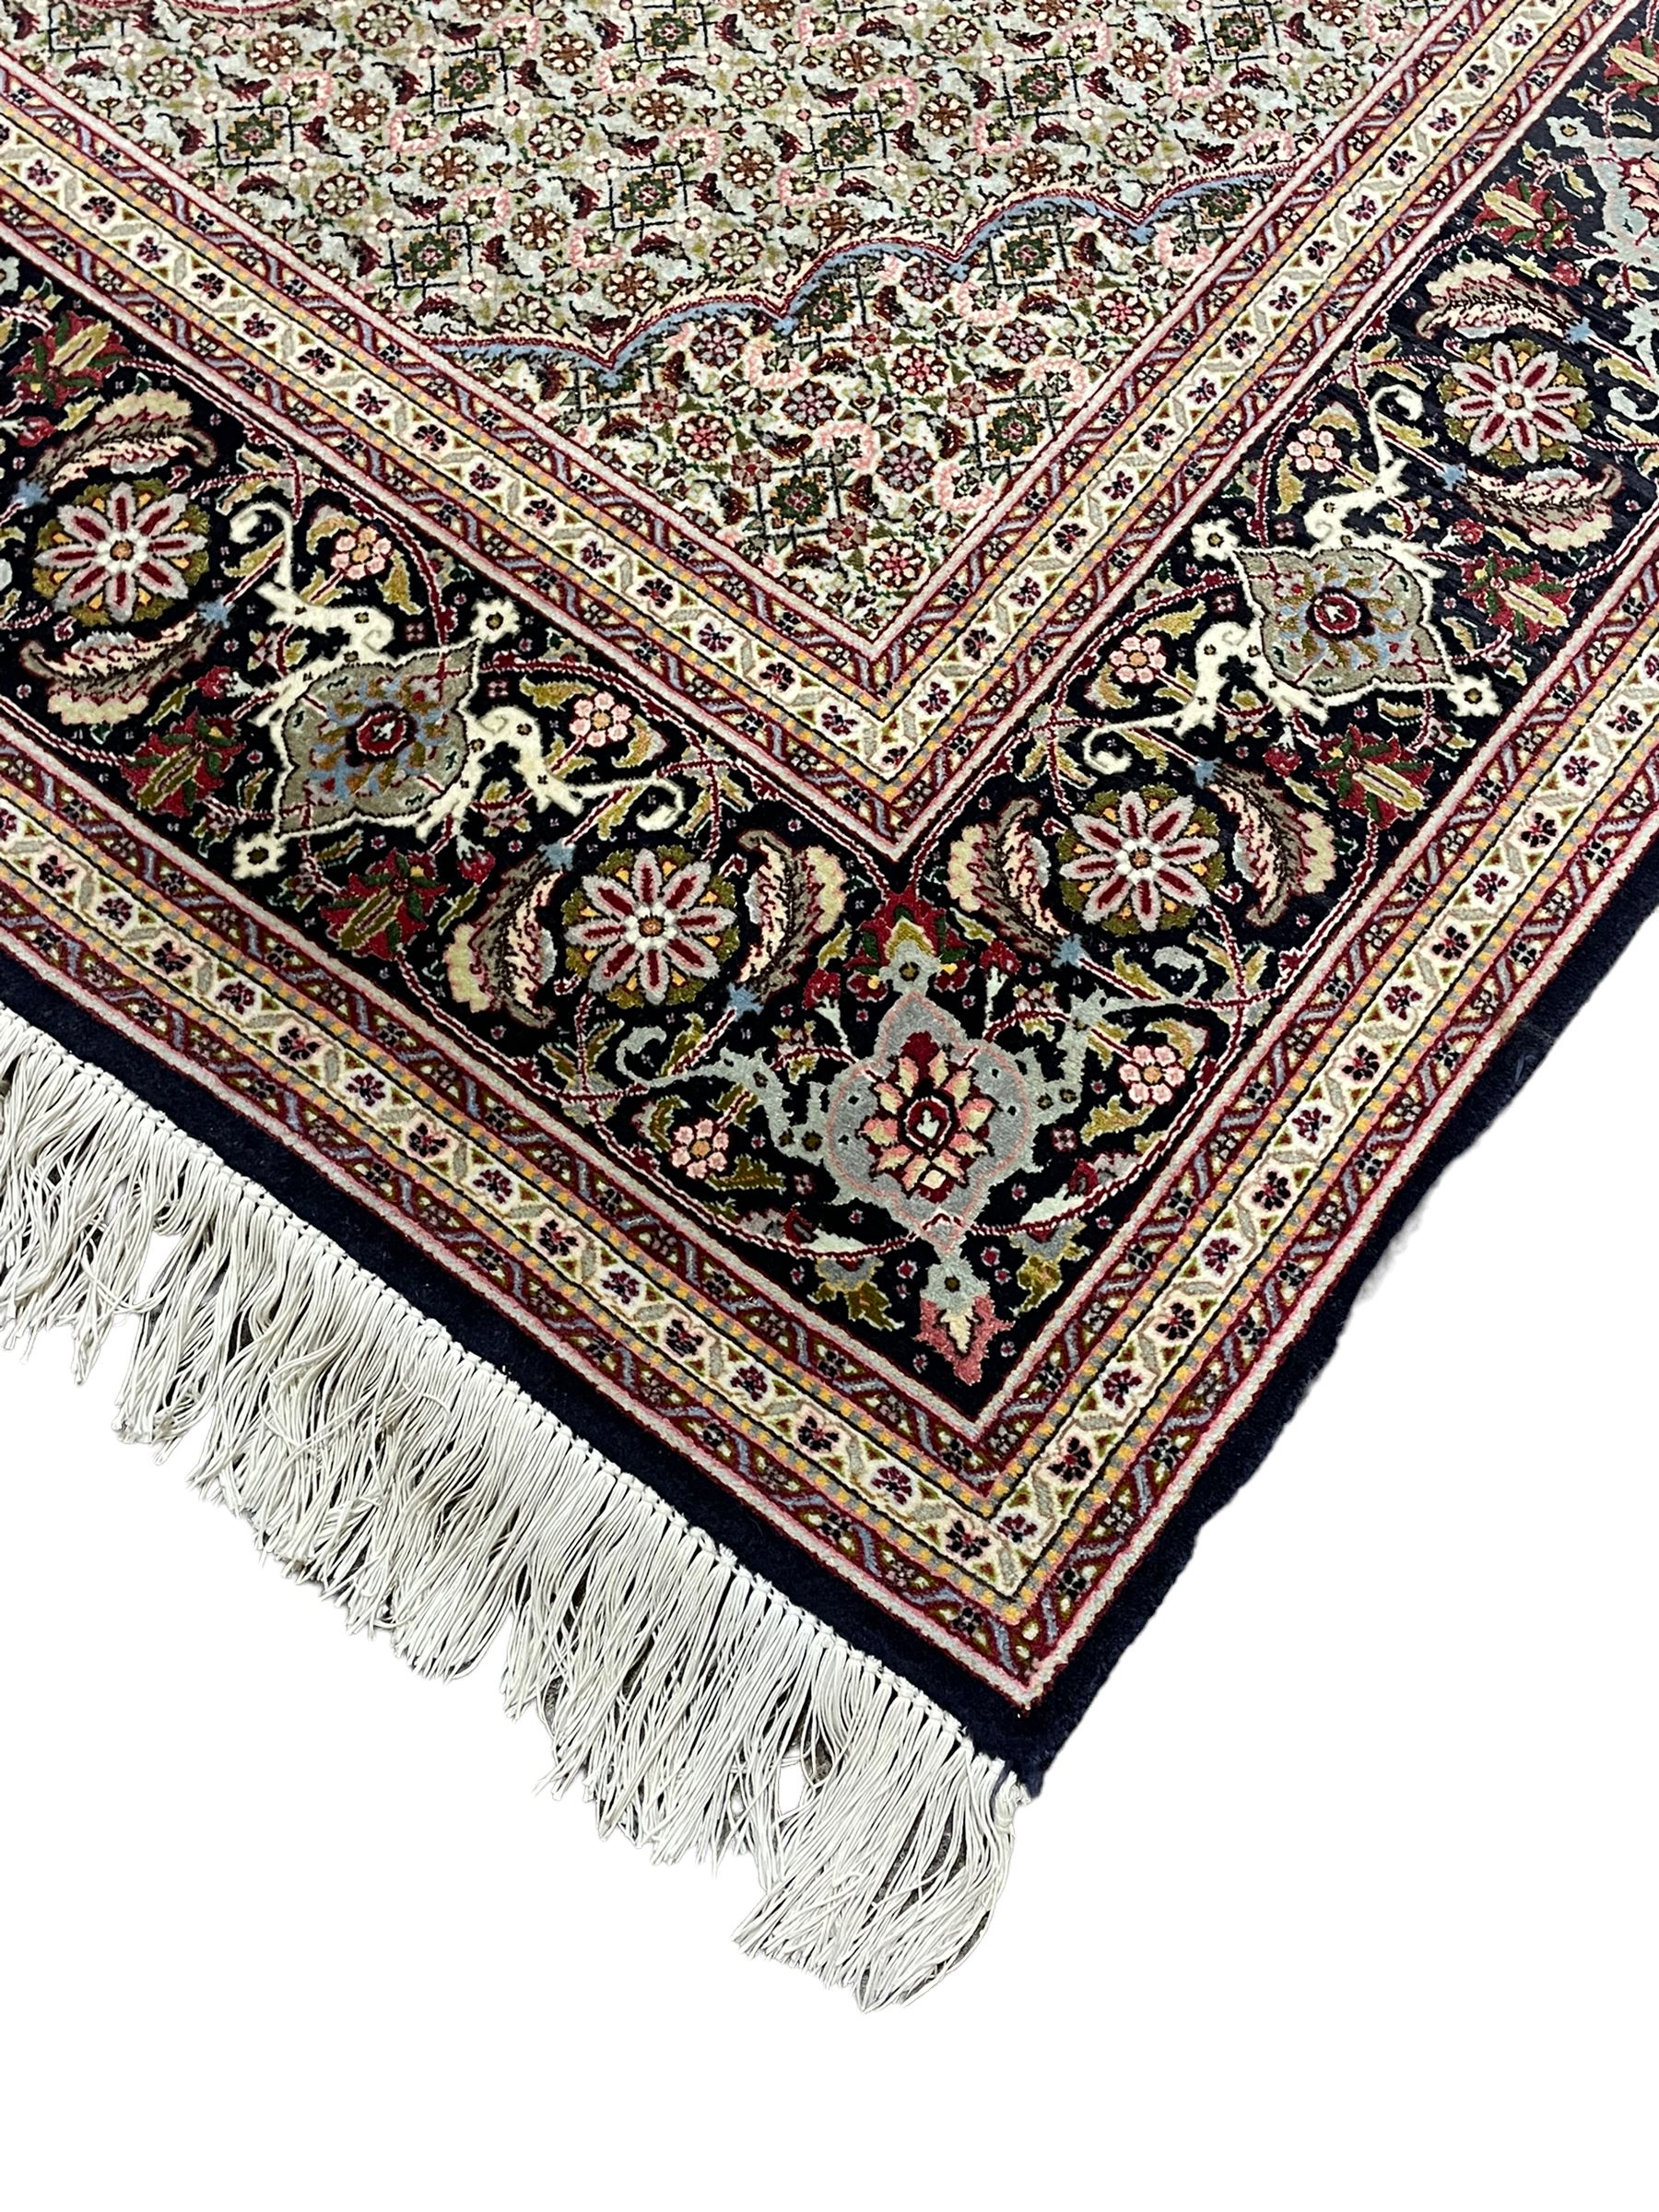 Fine Persian Tabriz rug - Image 3 of 8